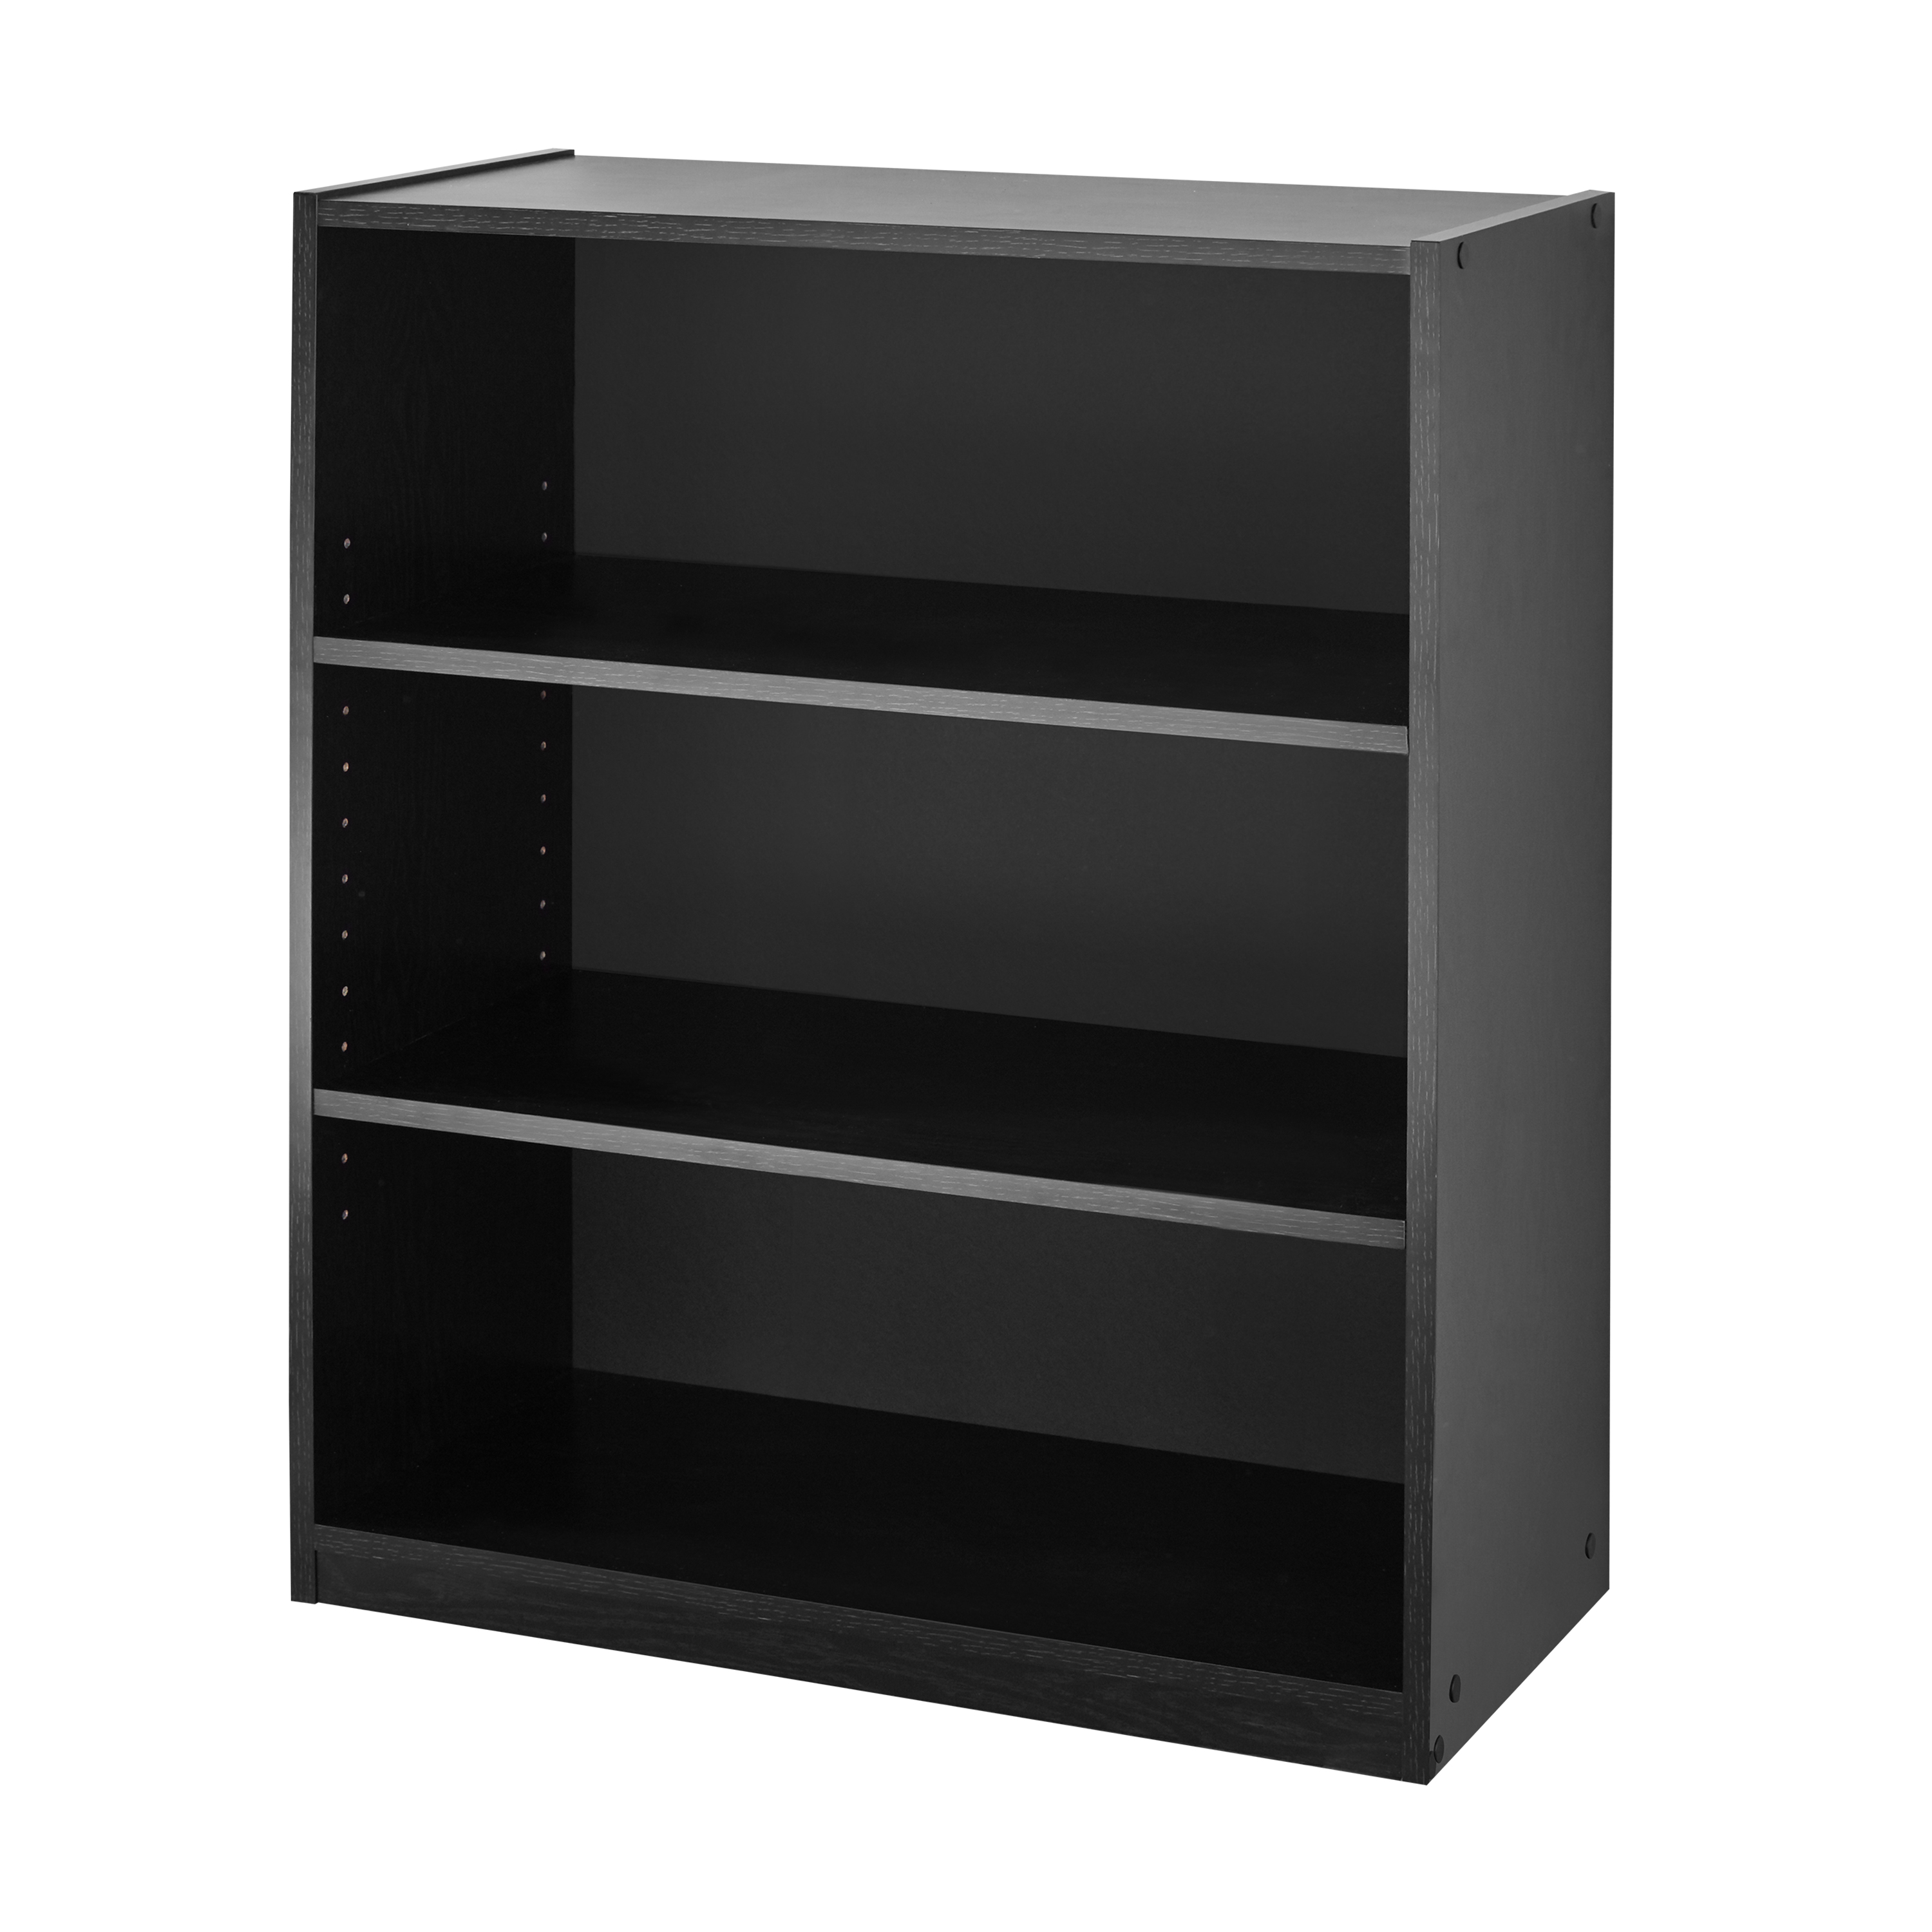 Mainstays 3-Shelf Bookcase with Adjustable Shelves, True Black Oak - image 5 of 6